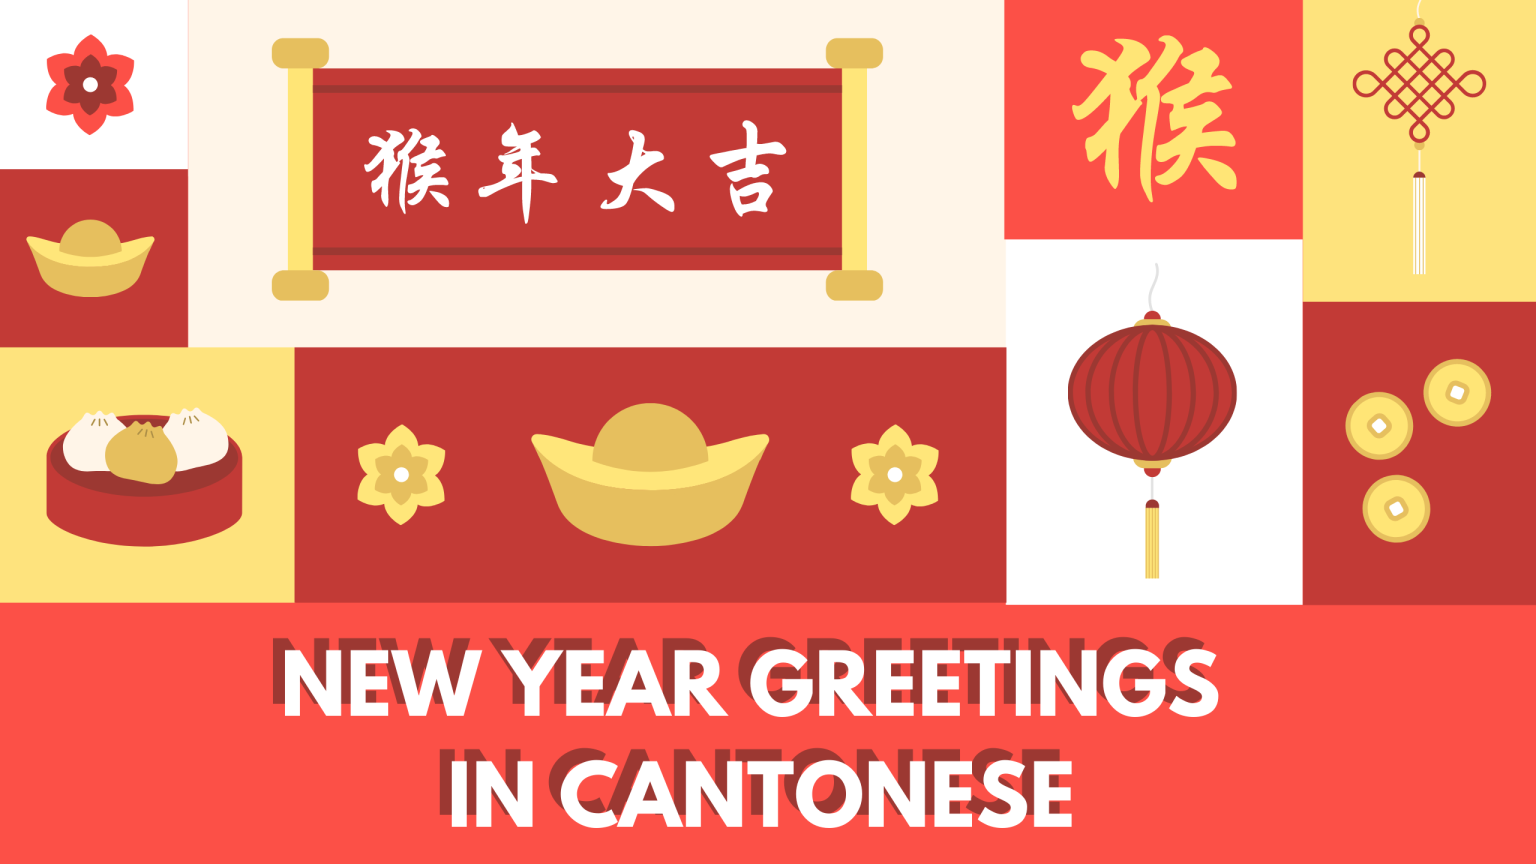 Cantonese New Year Greetings 8 Popular Ways Ling App